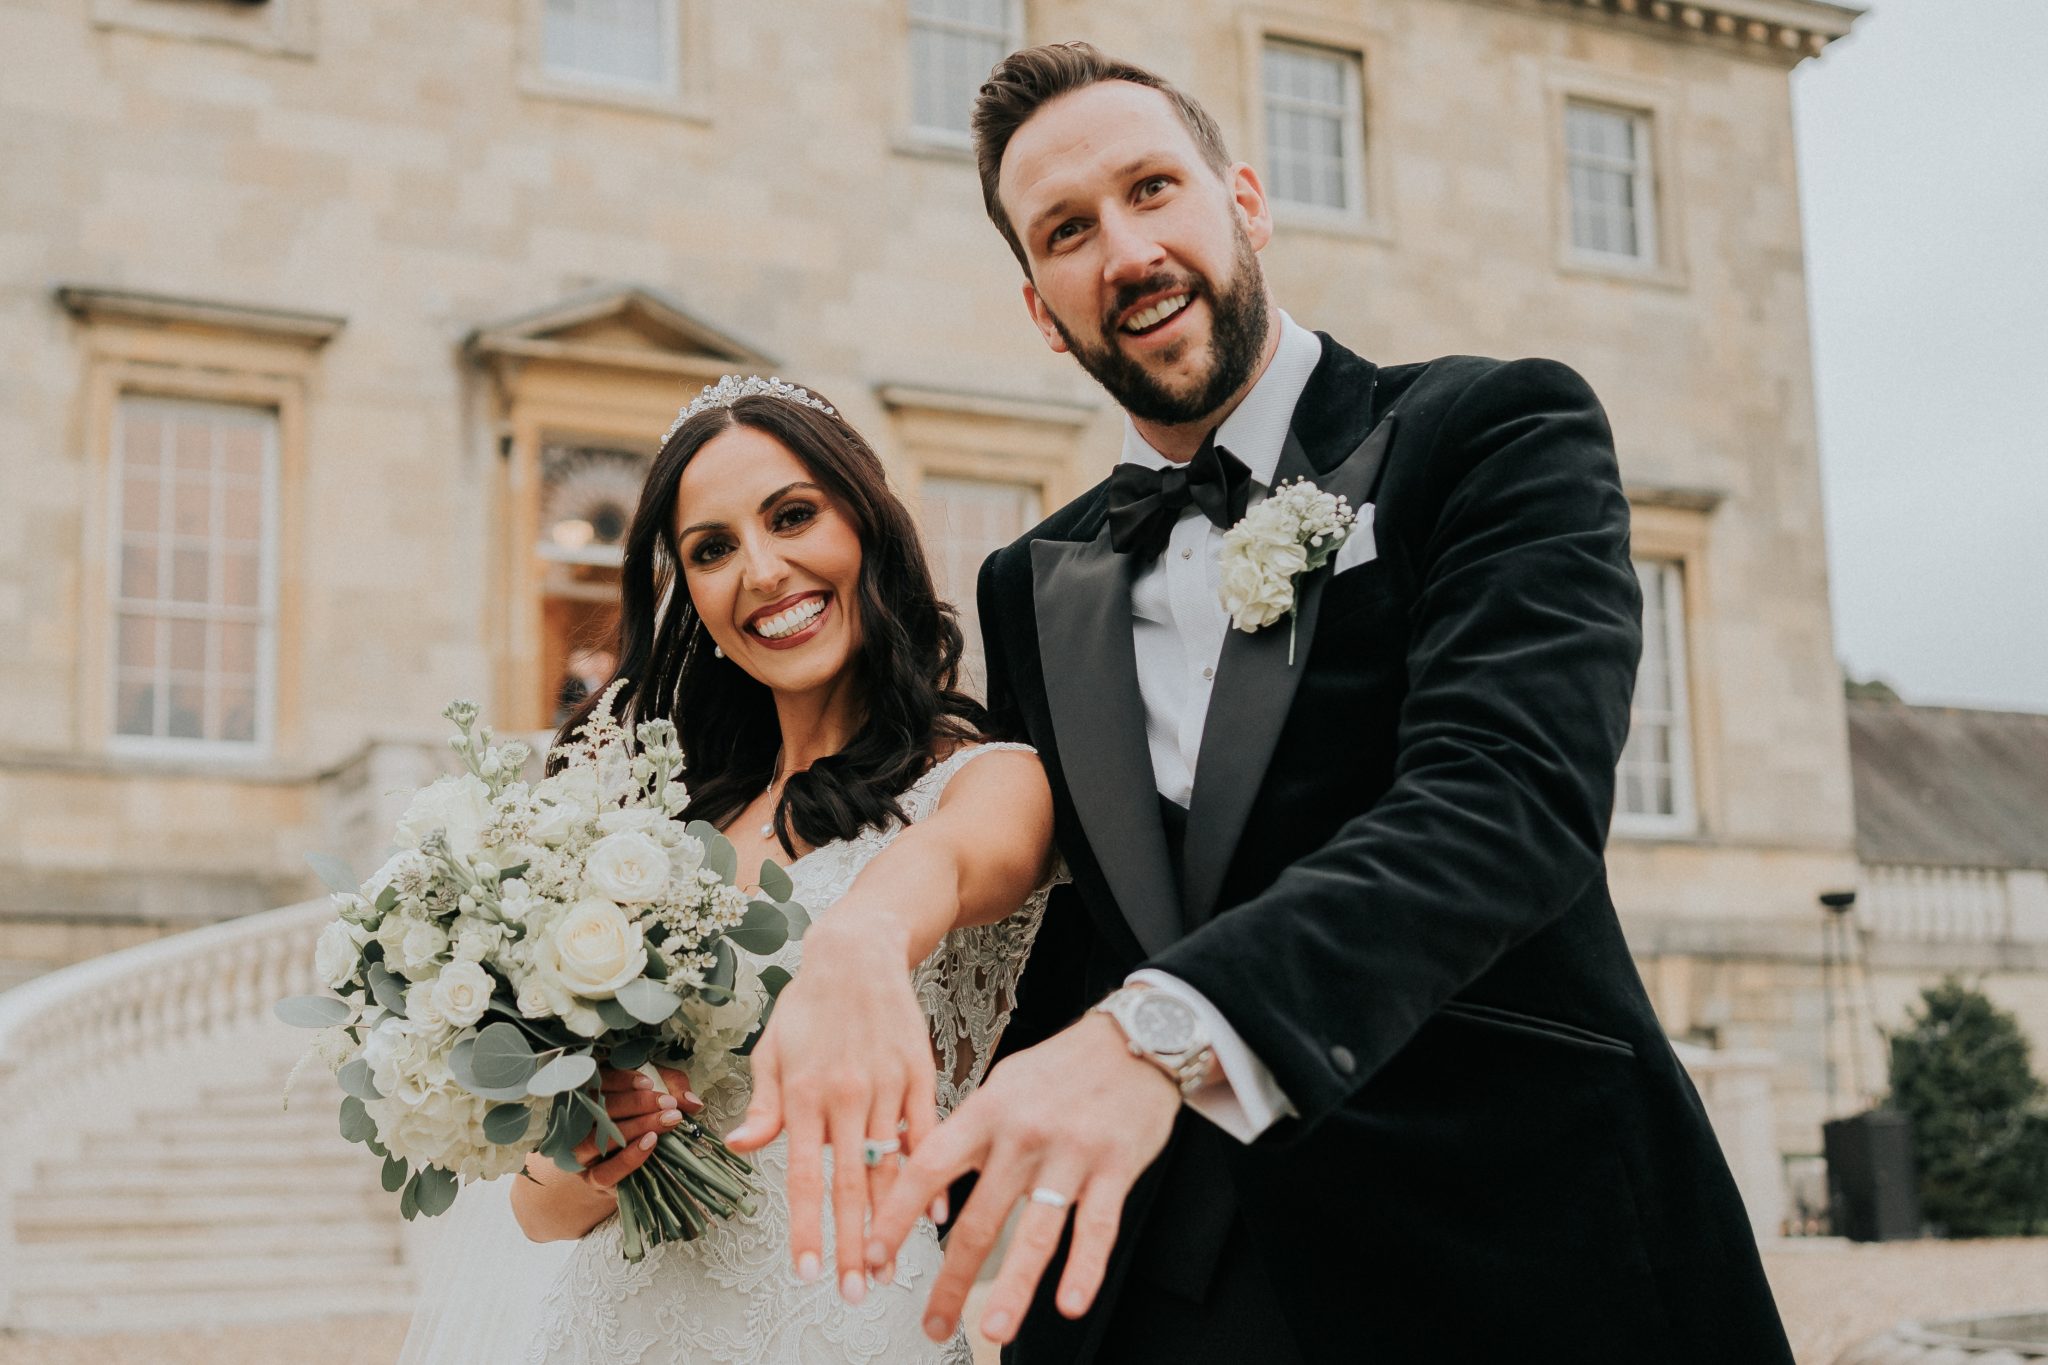 Charlotte & Ben’s wedding at Botleys Mansion